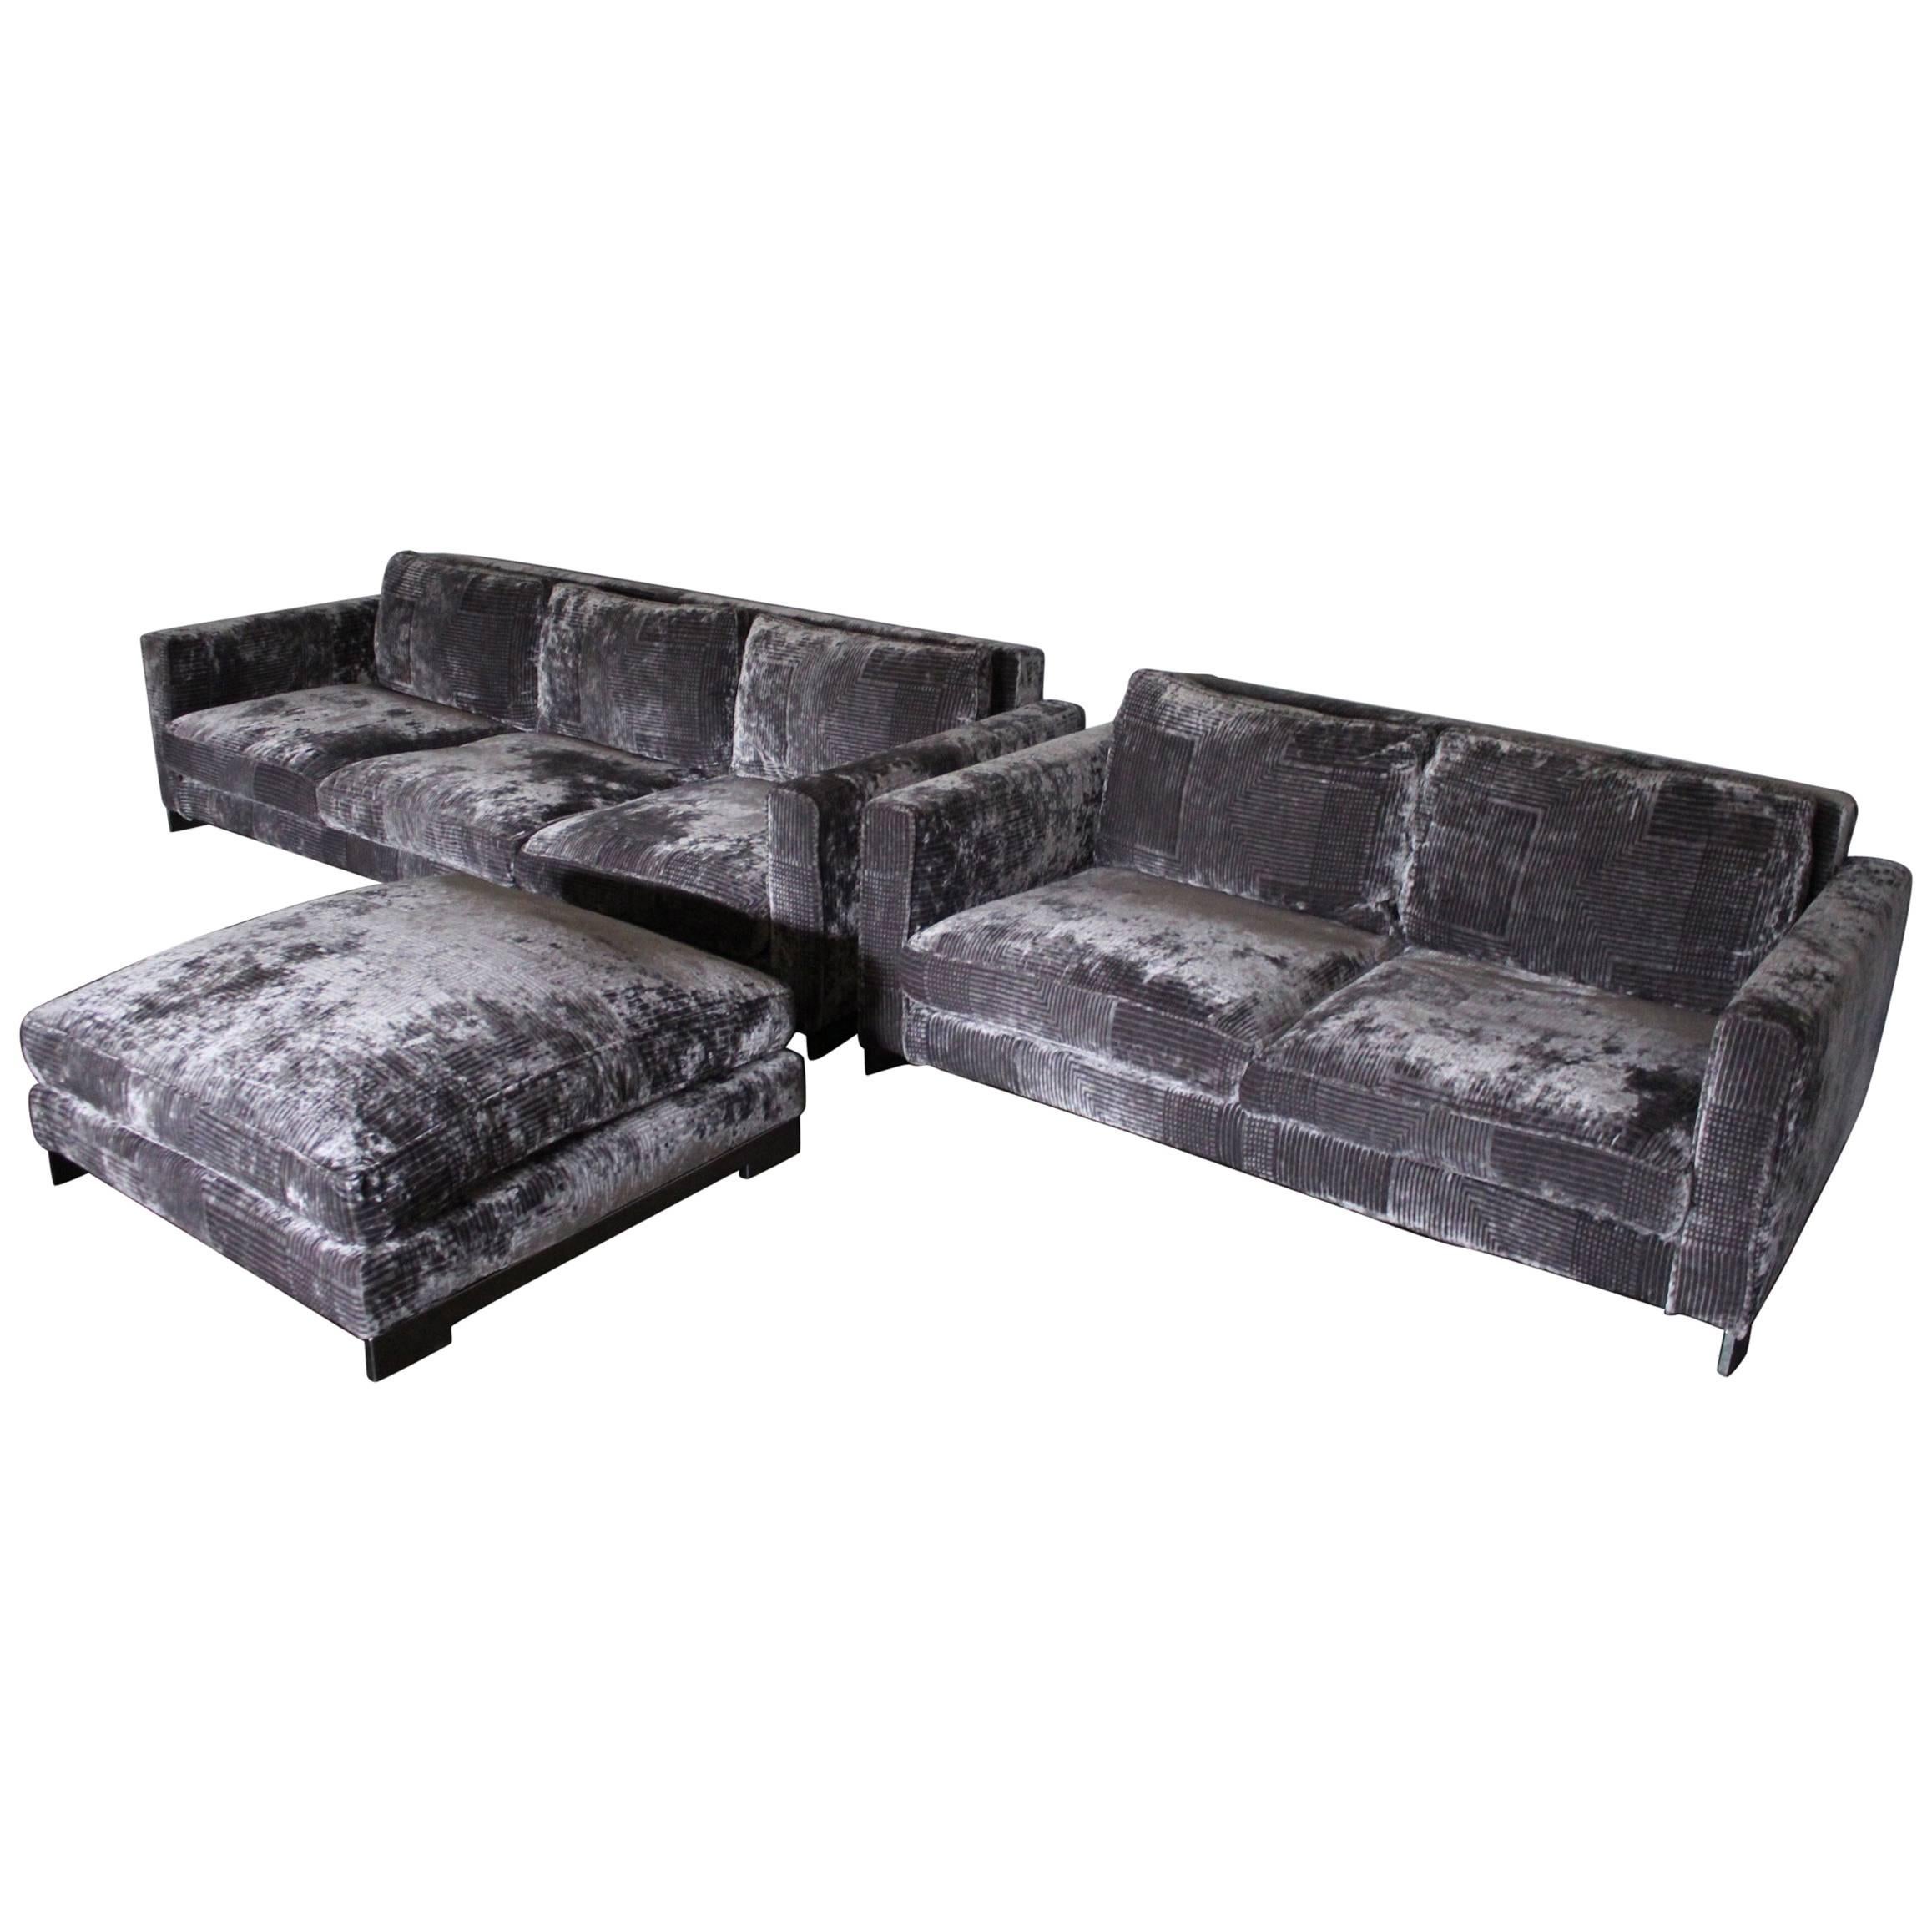 Molteni & C "Reversi" Two Sofa and Ottoman Suite in Silver Grey and Black Velvet